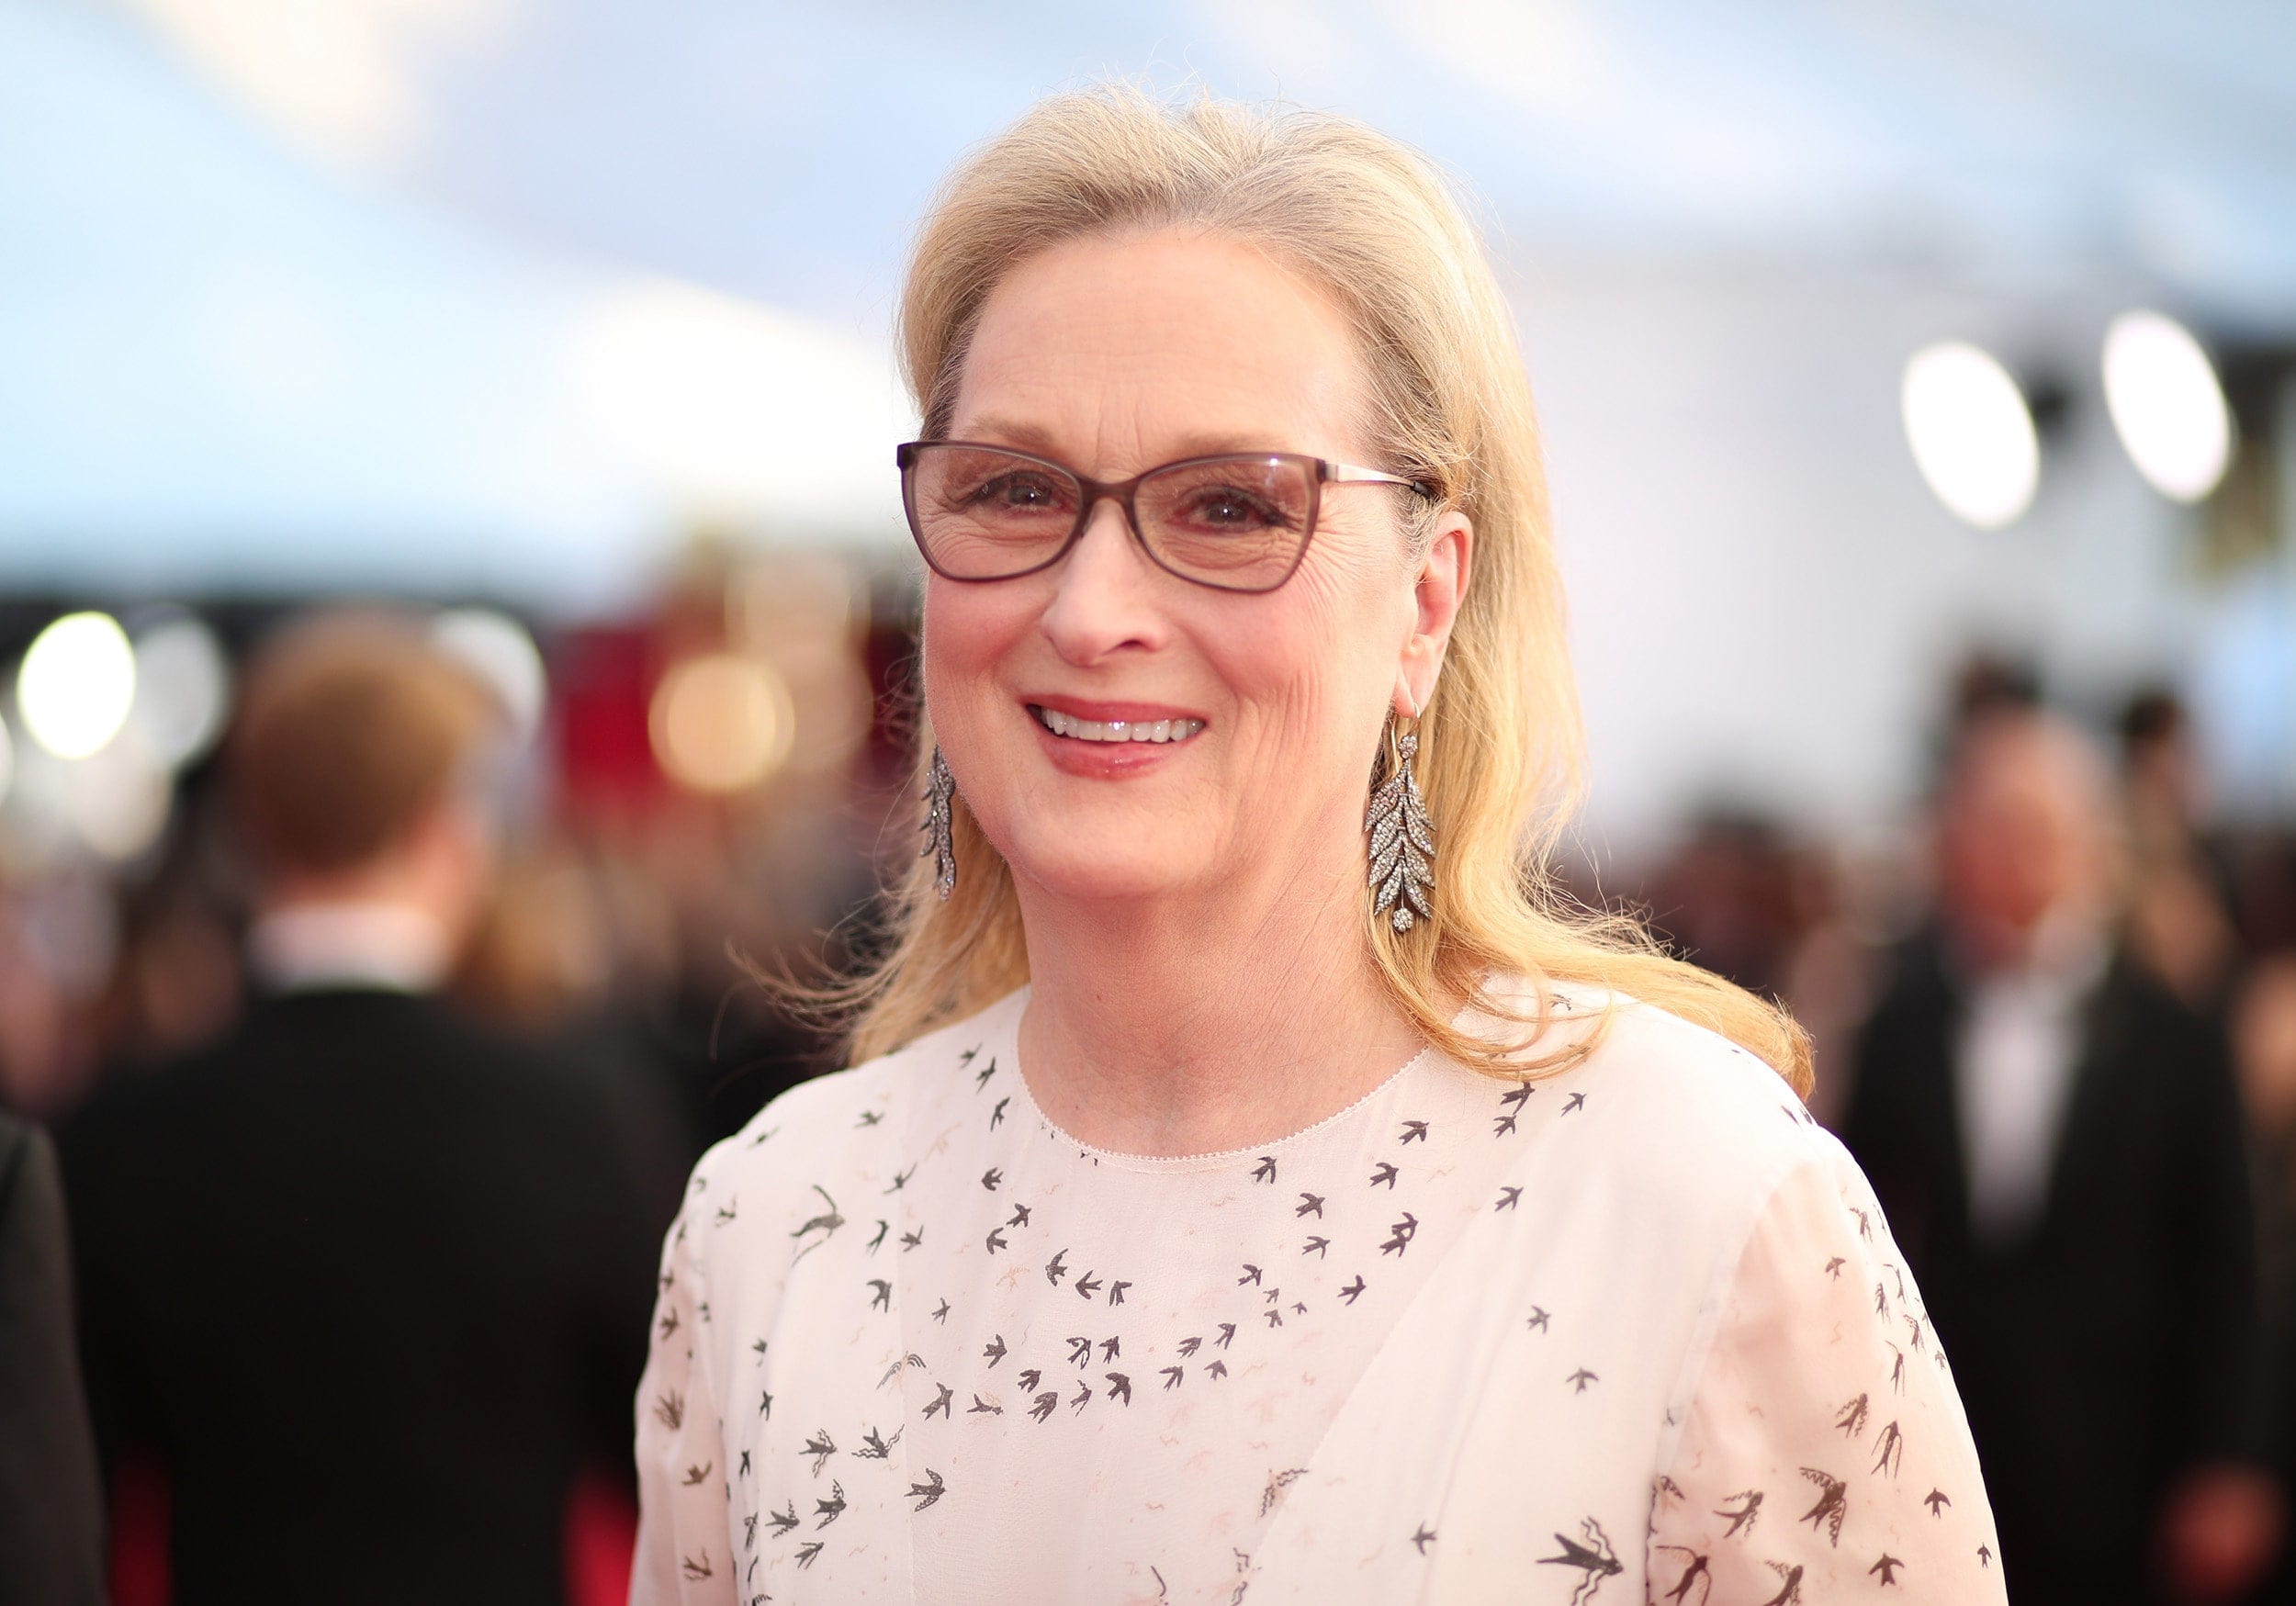 Who is Meryl Streep dating